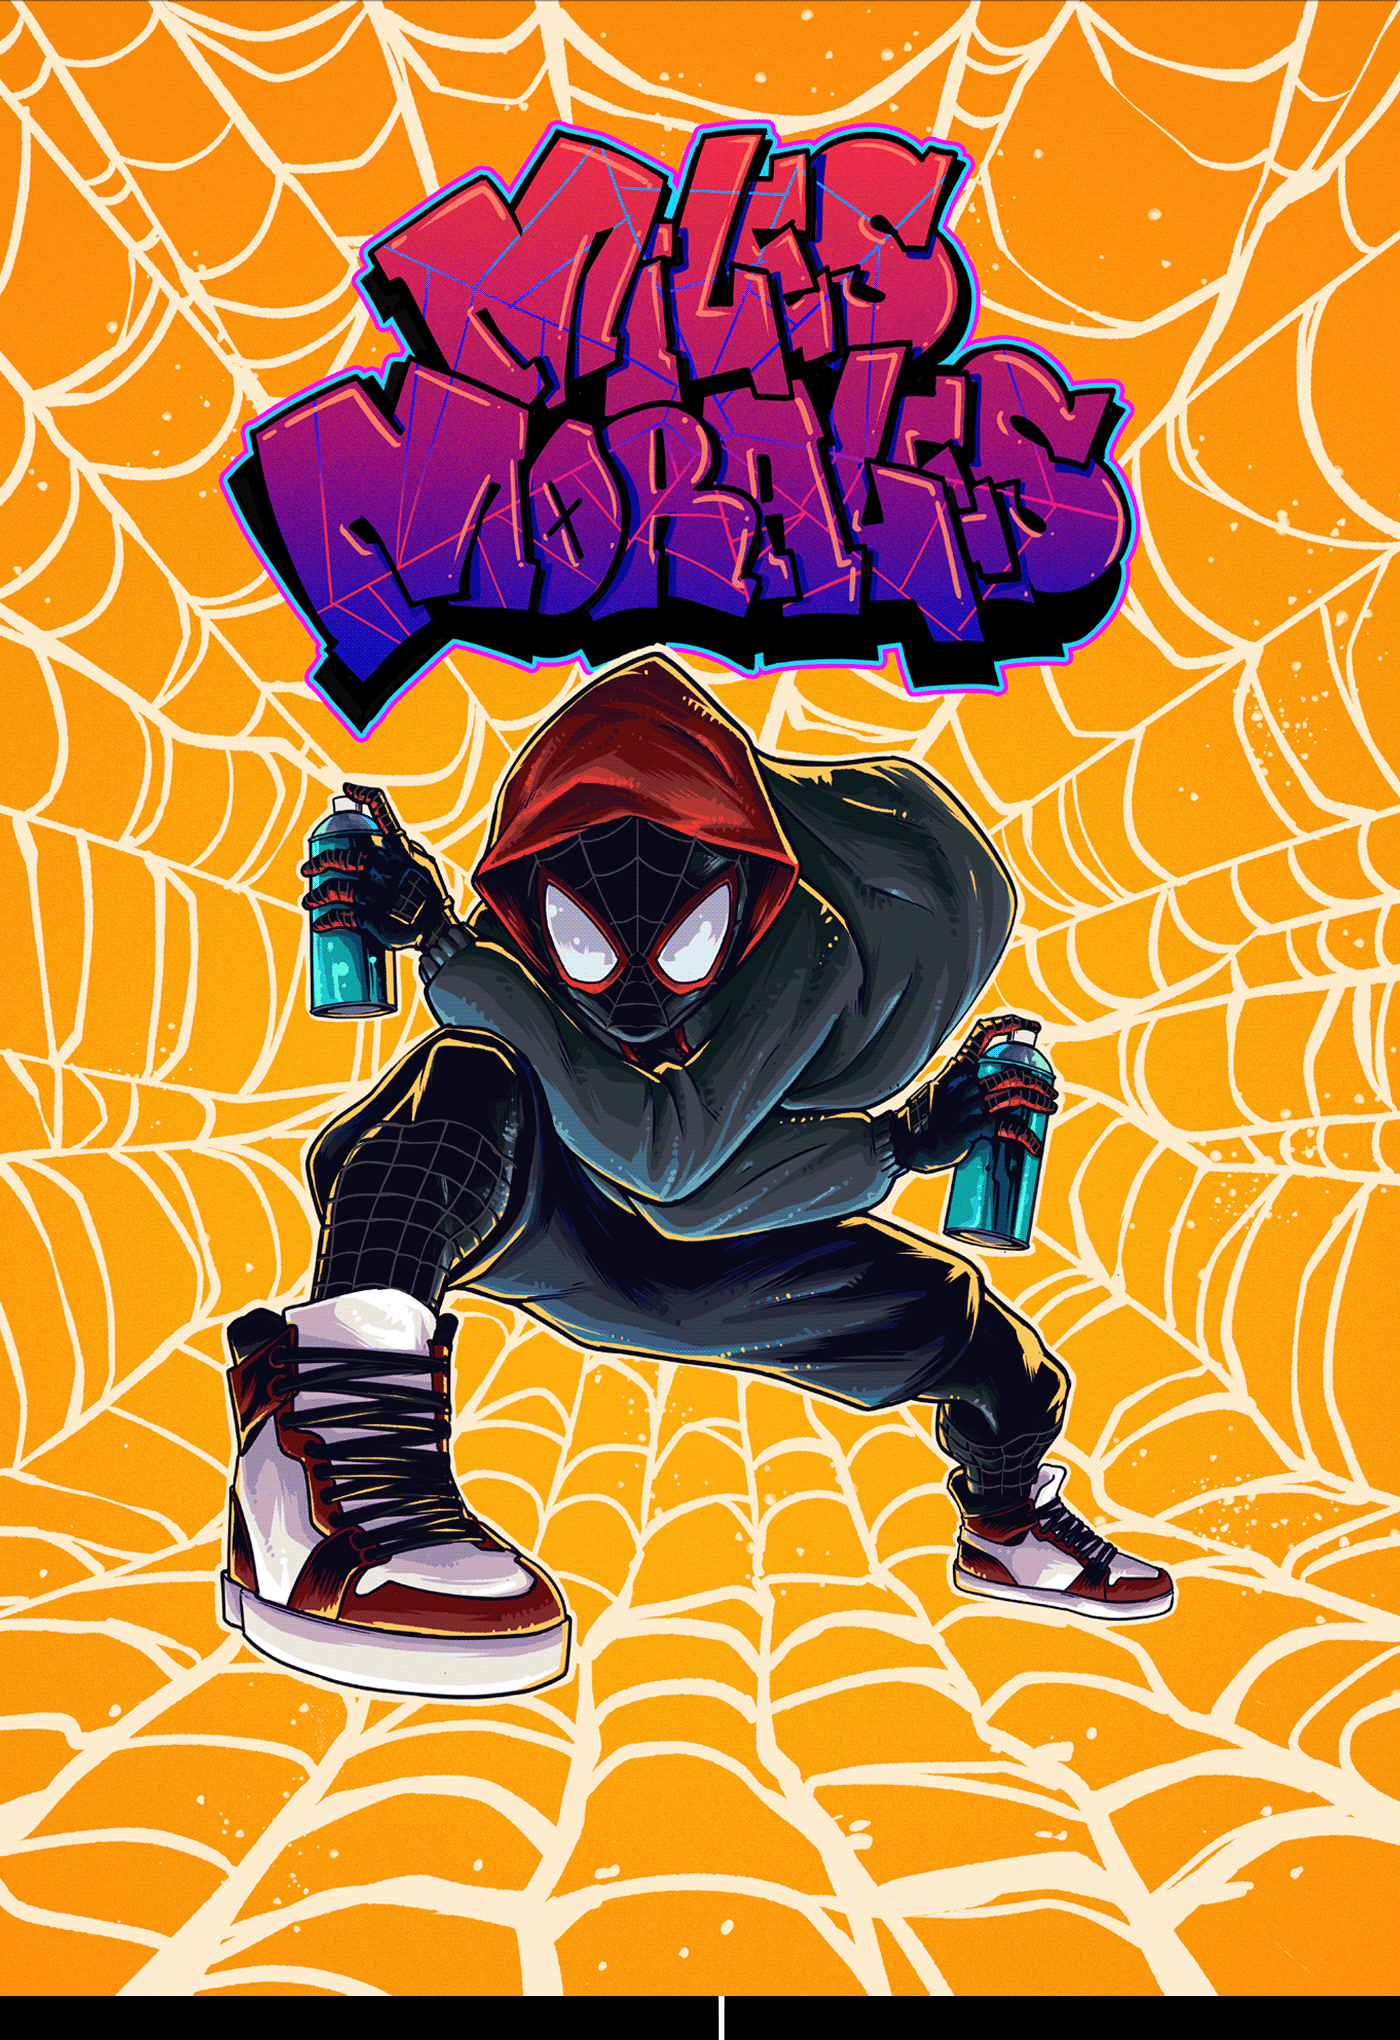 advertisement Advertising  campaign homem aranha marvel marvel comics Marvel Studios miles morales  Spider Man spiderman